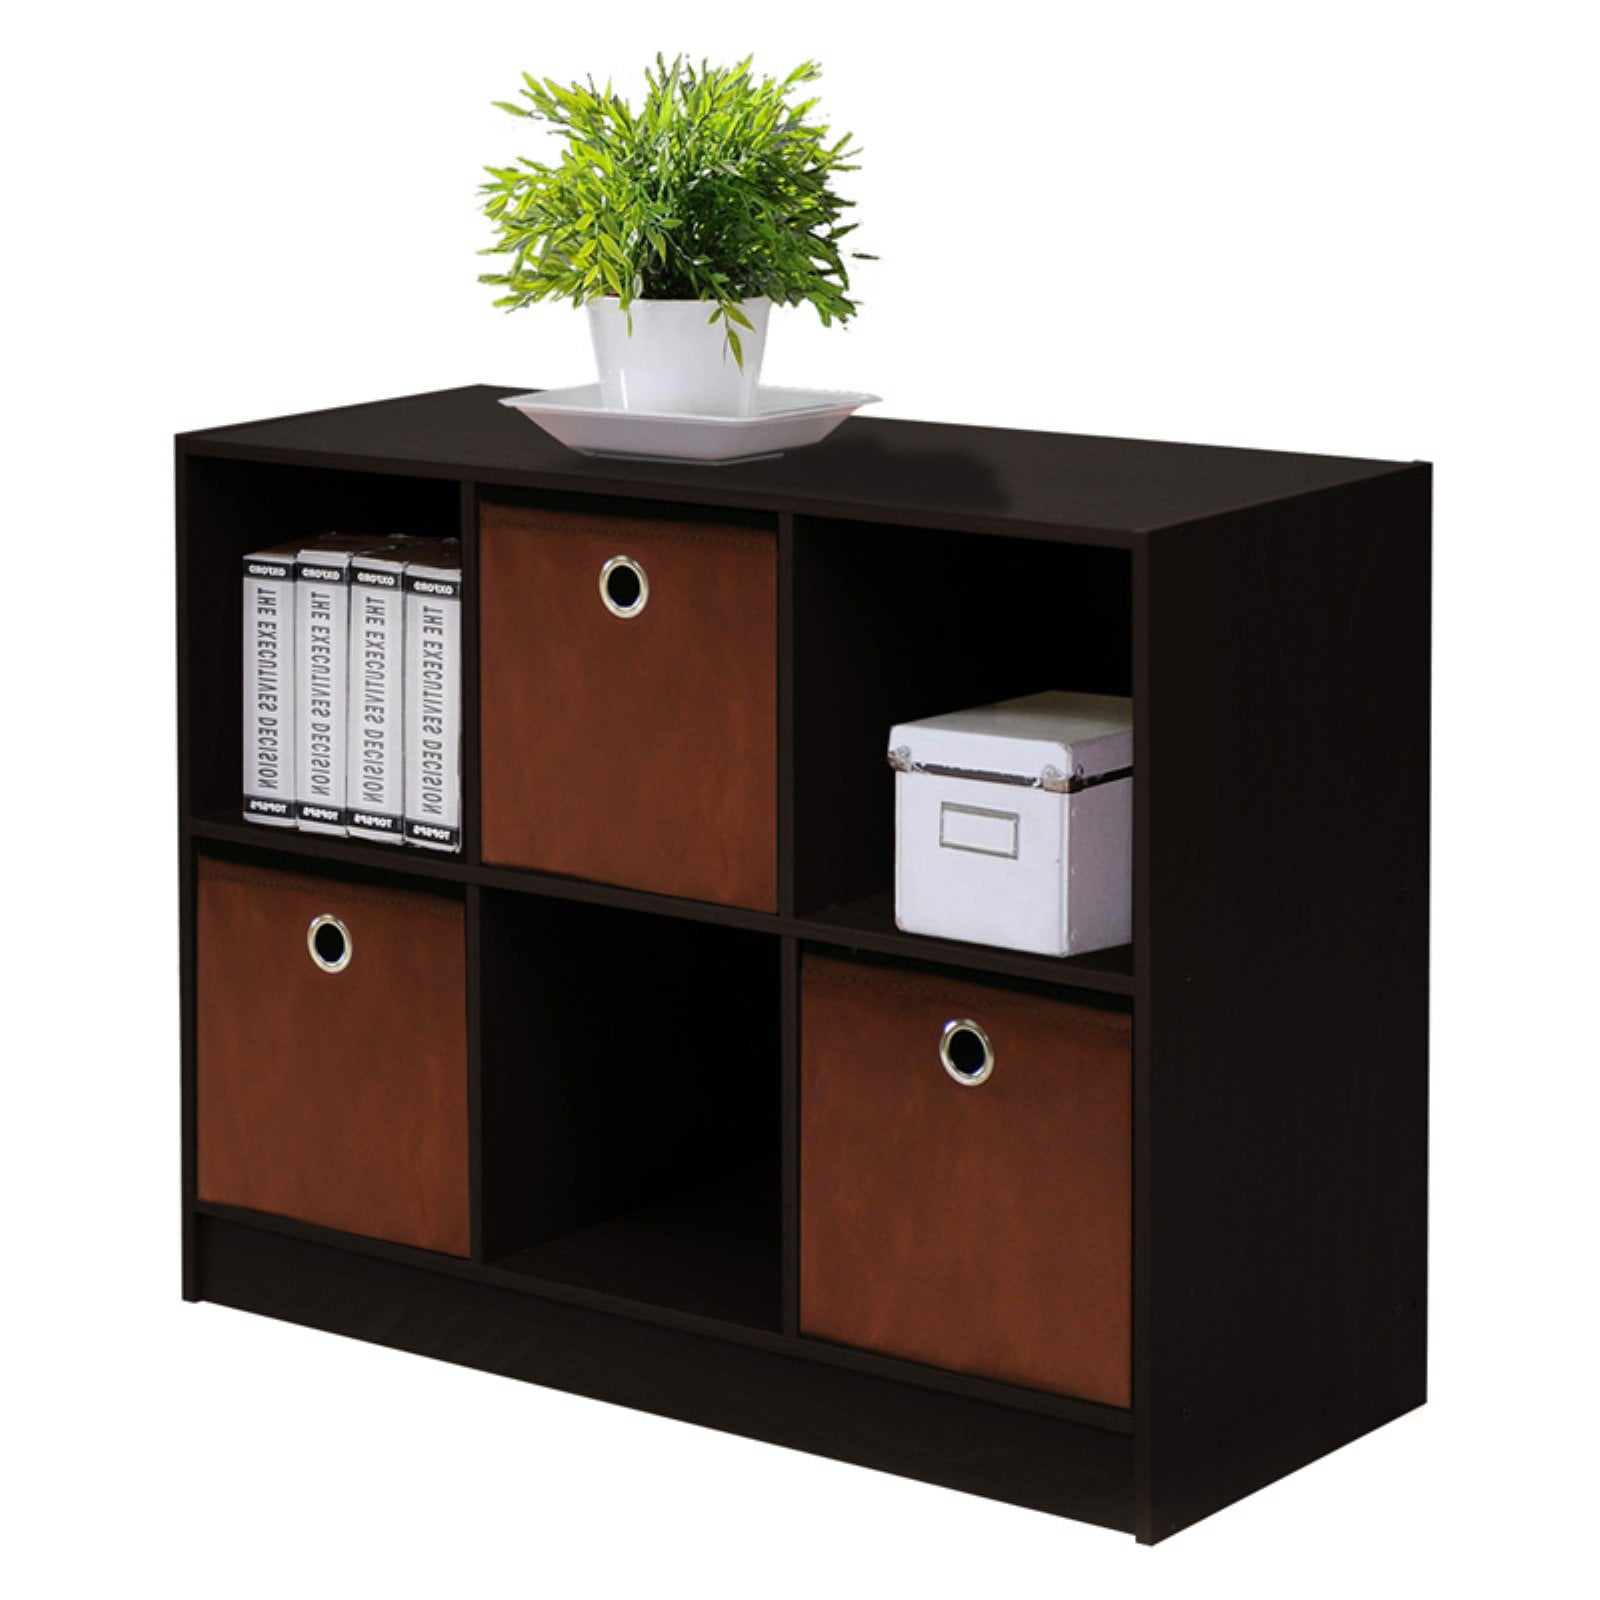 3 Level Bookcase Cabinet Organizer 3 Storage Bins Shelves 6 Cubes Home Furniture 